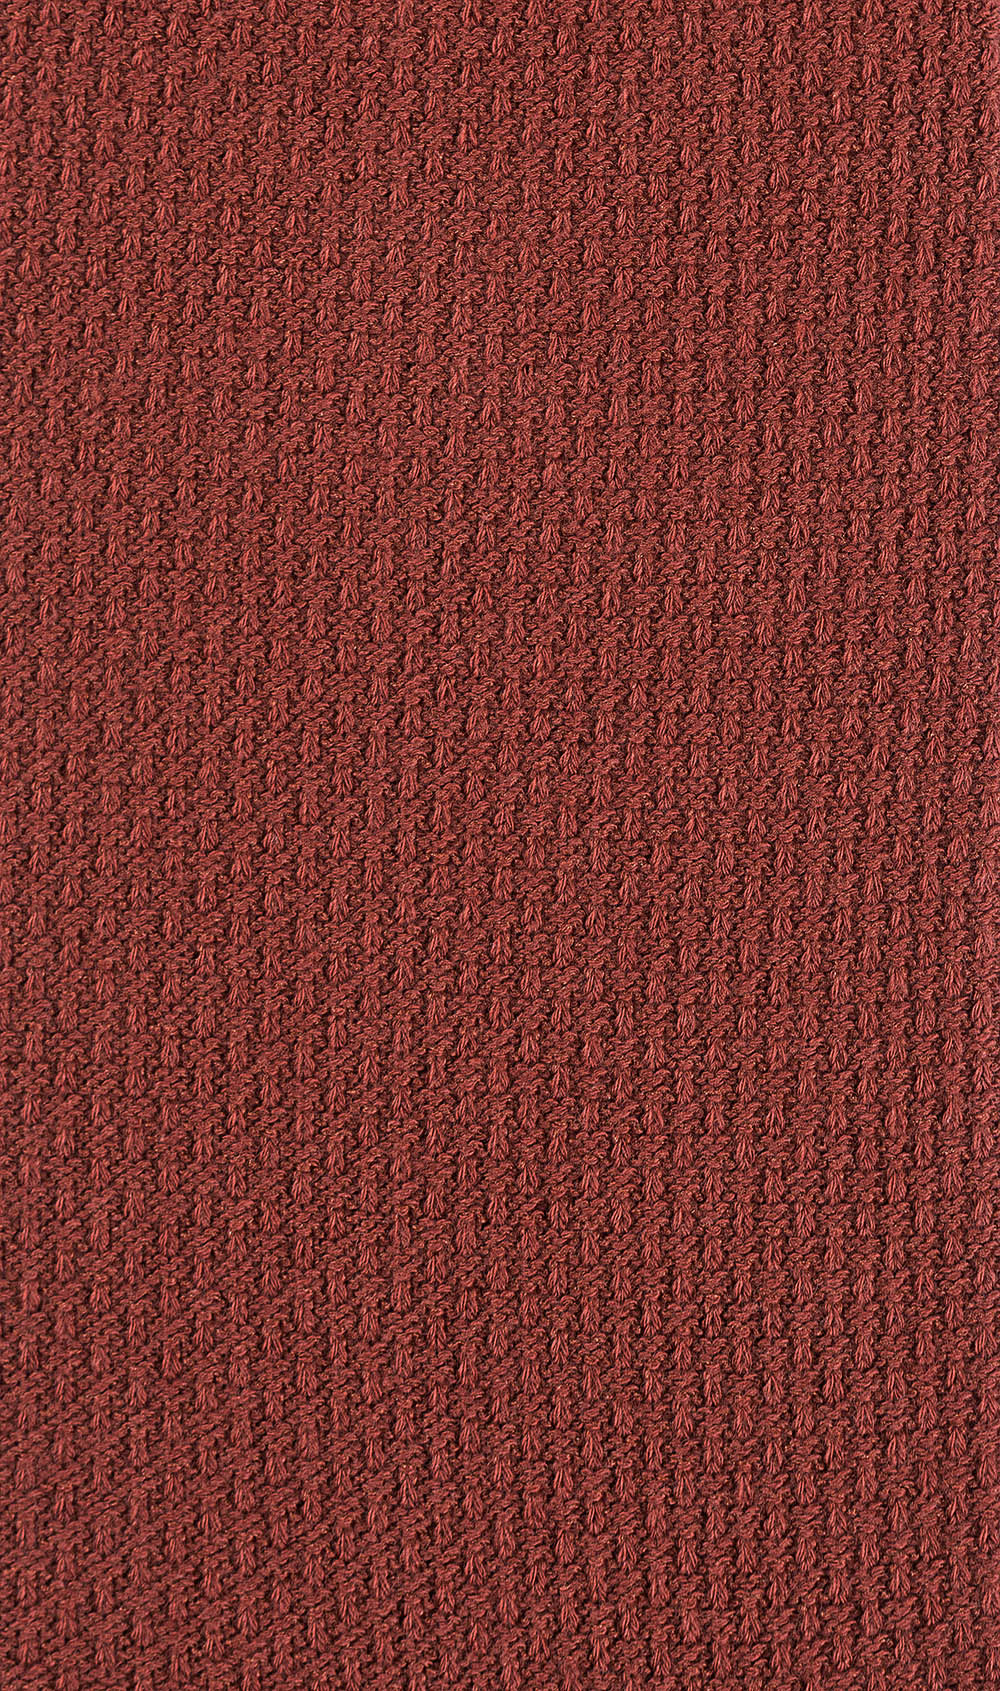 Burnt Golden Brown Textured Socks Pattern